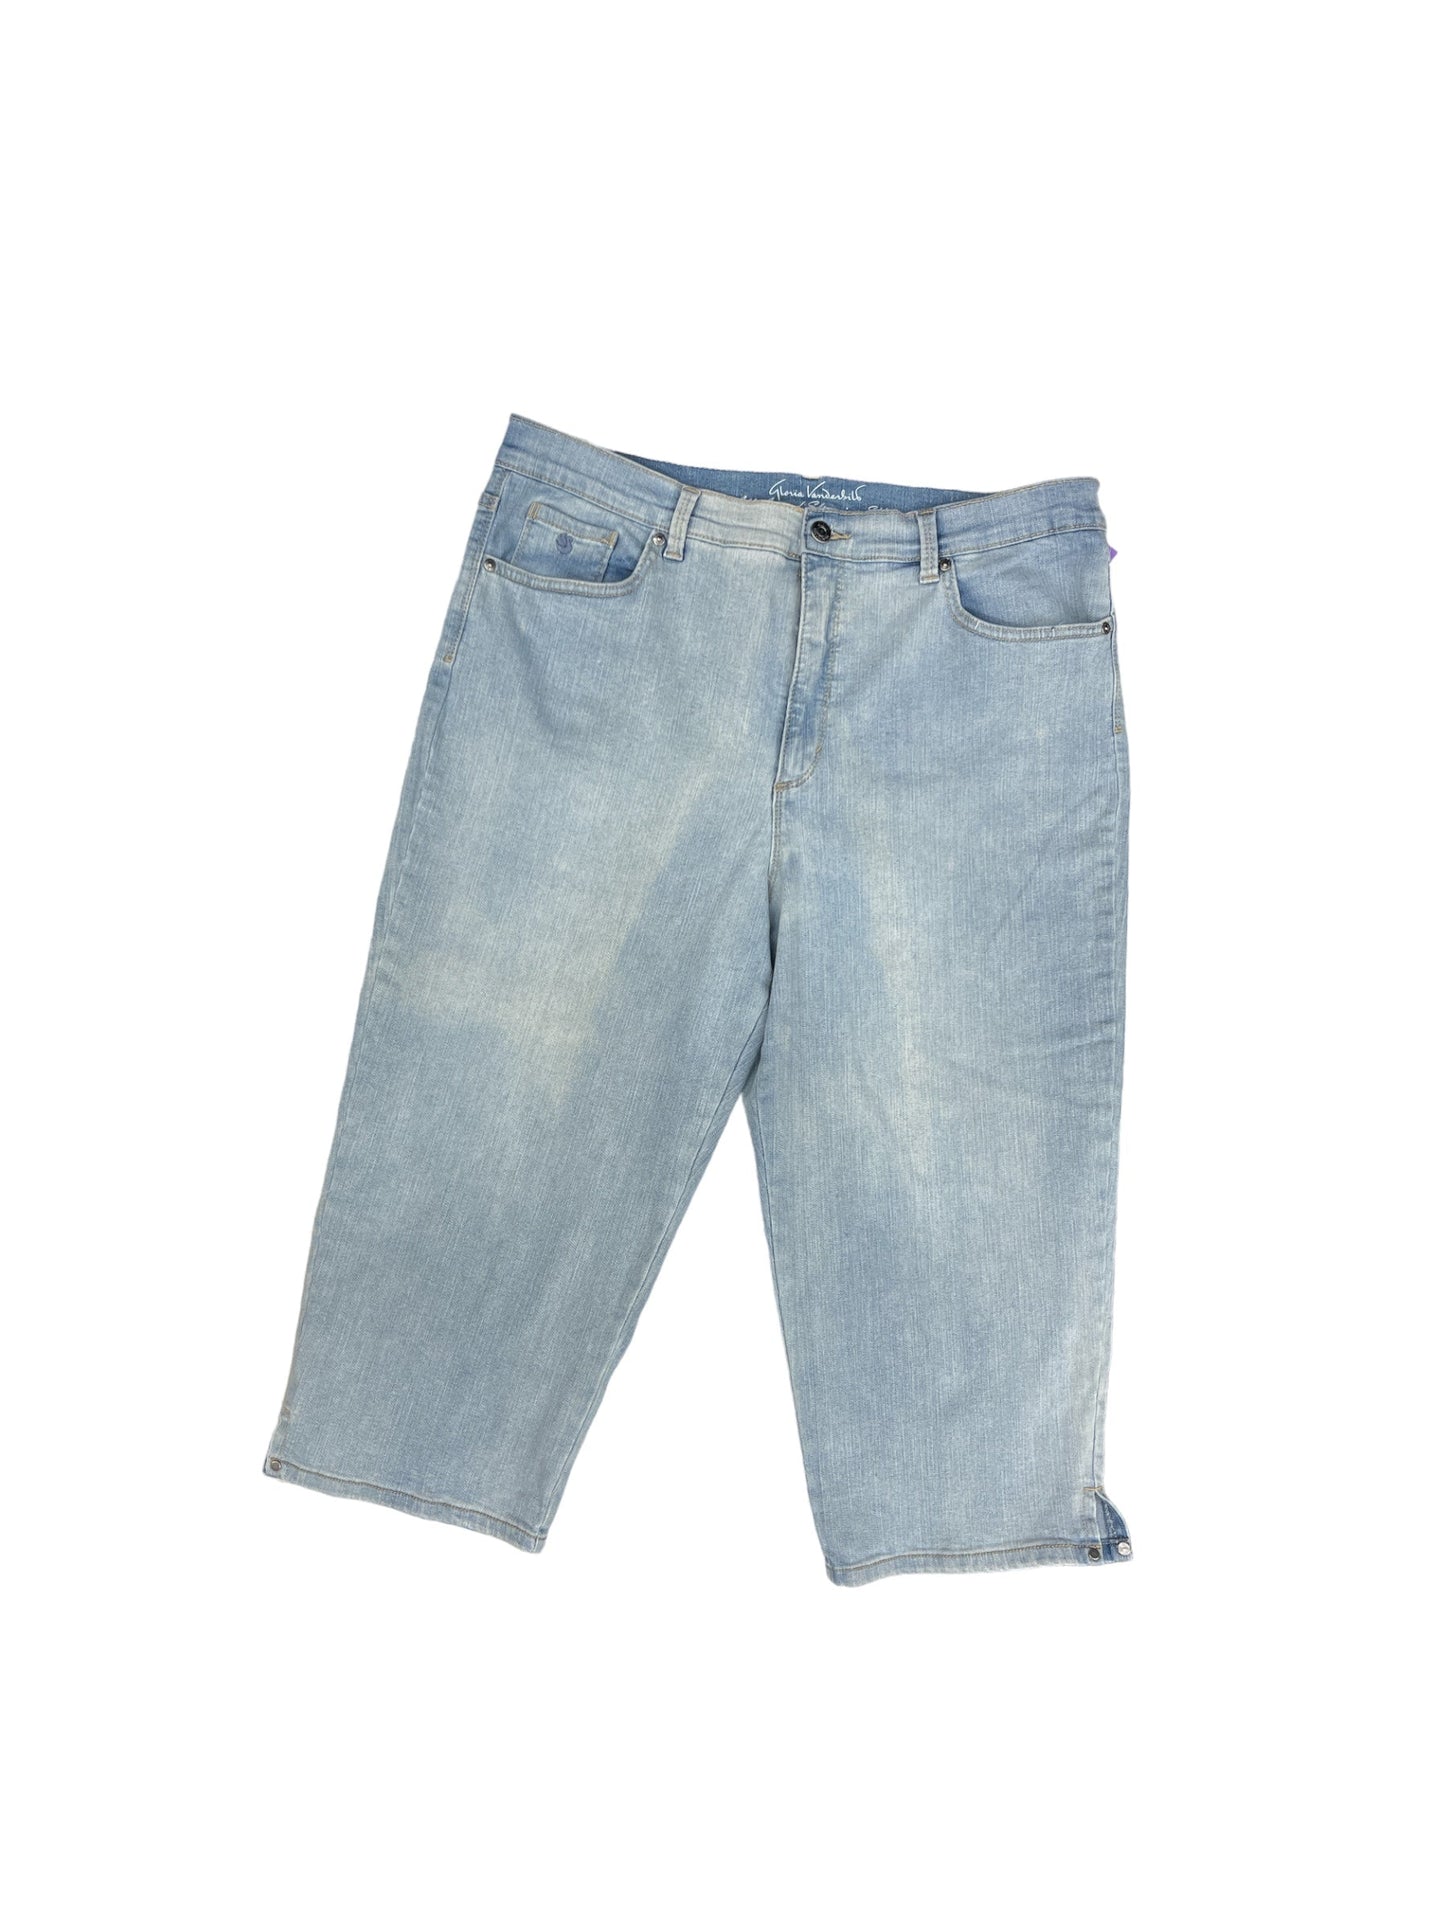 Blue Denim Jeans Cropped Gloria Vanderbilt, Size 14